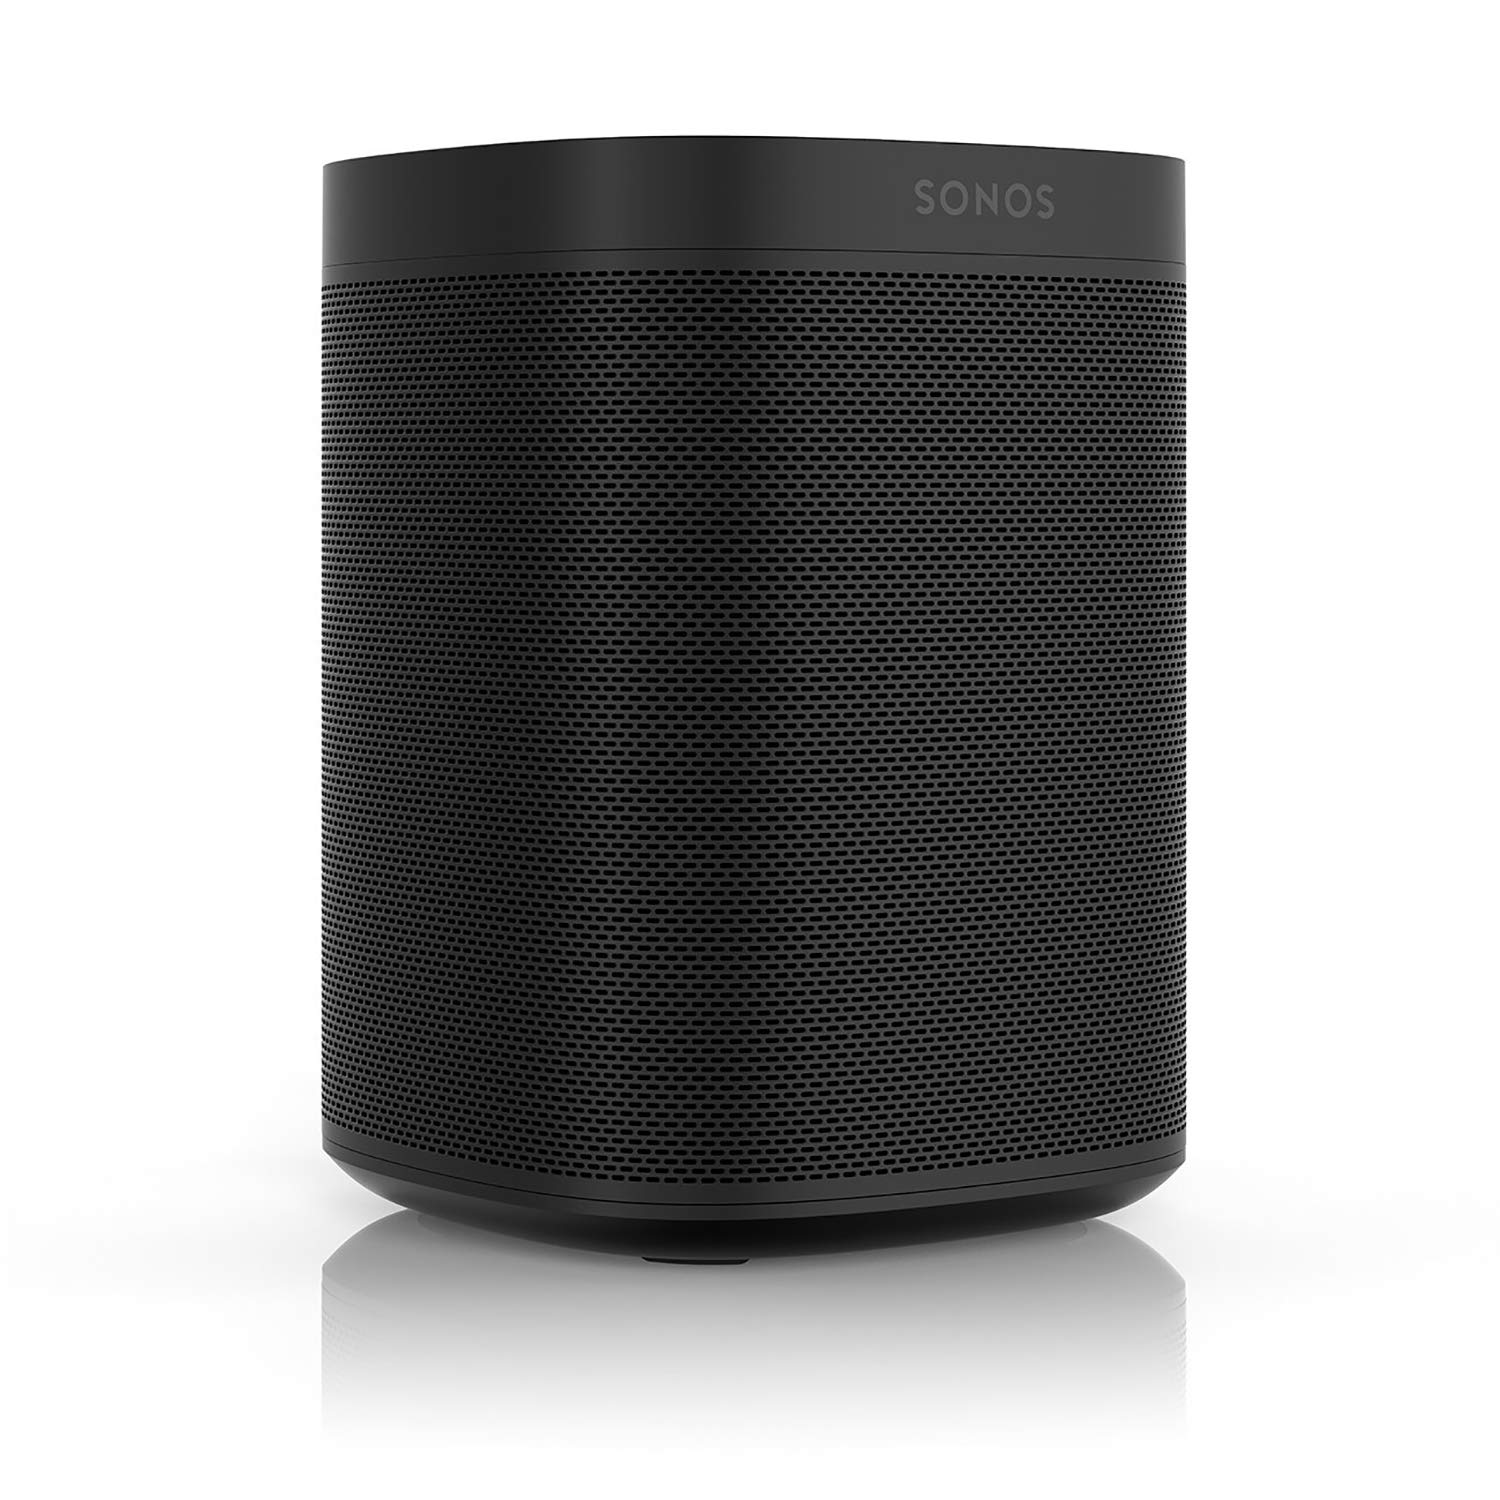 Sonos One（第 2 代）- 内置 Amazon Alexa 的语音控制智能扬声器...